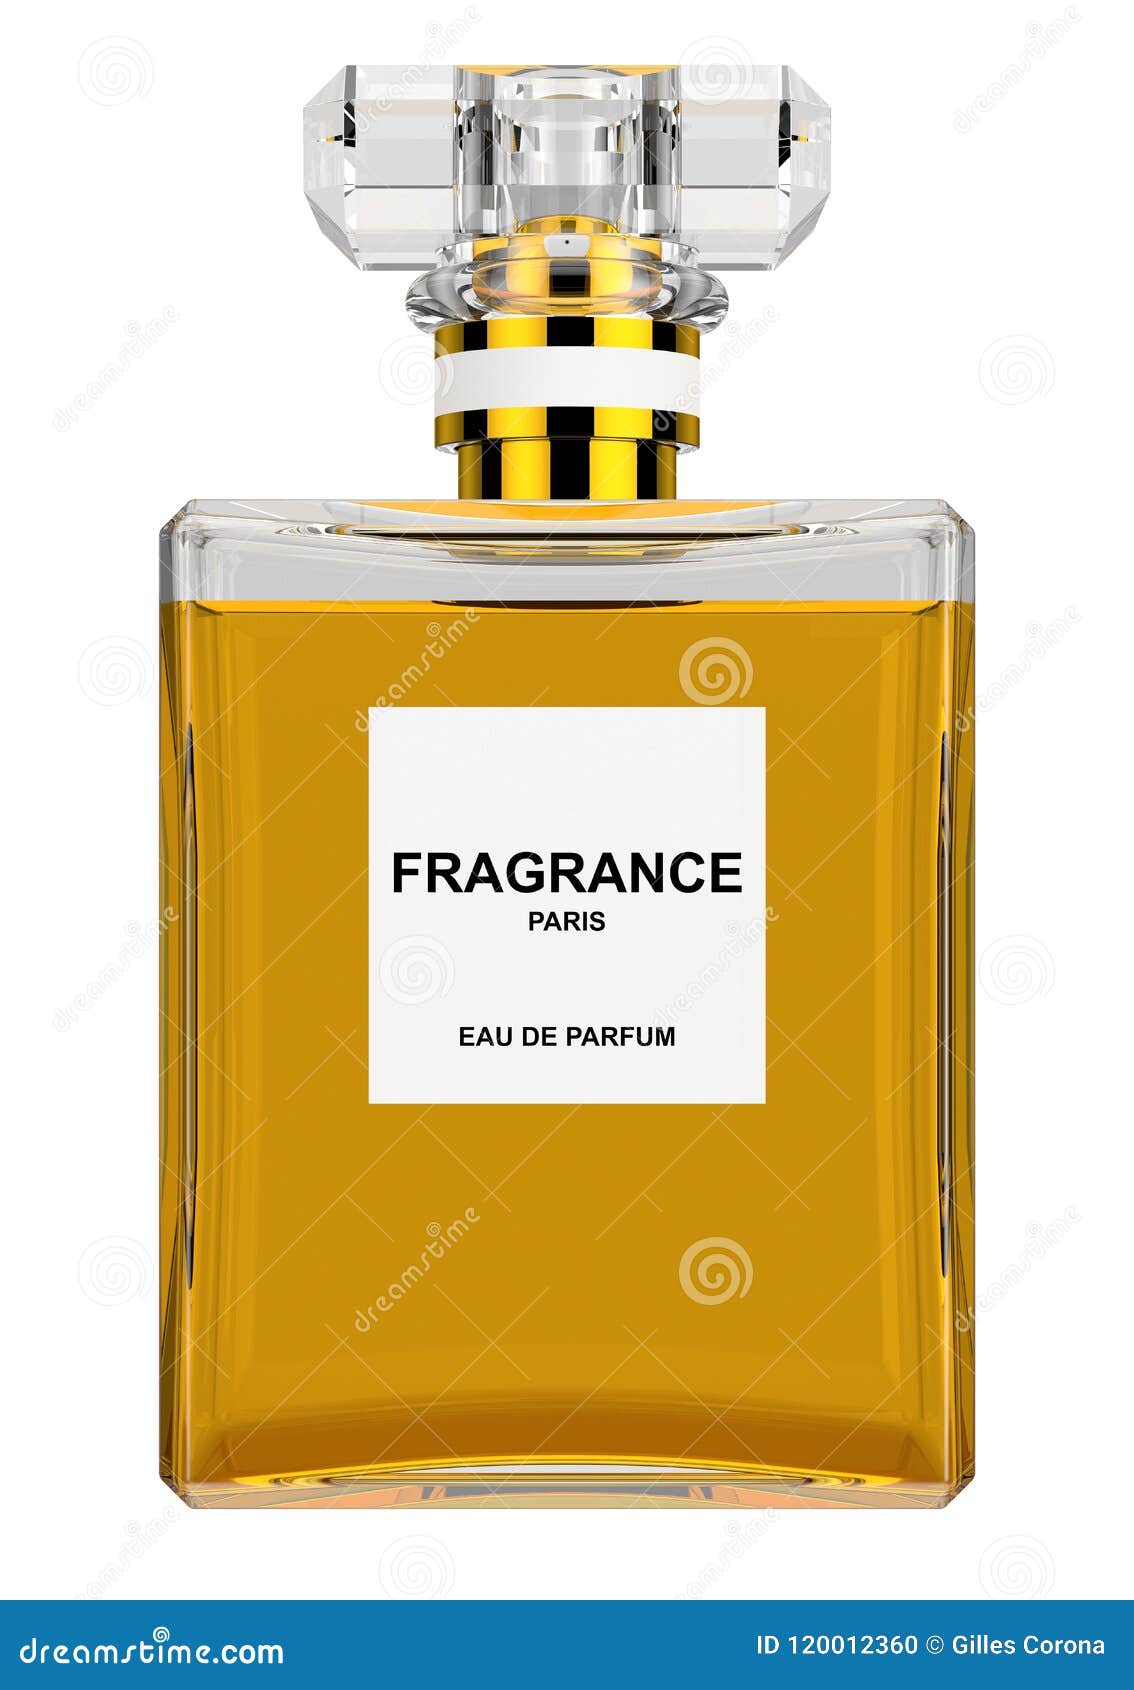 Fragrance stock illustration. Illustration of background - 120012360